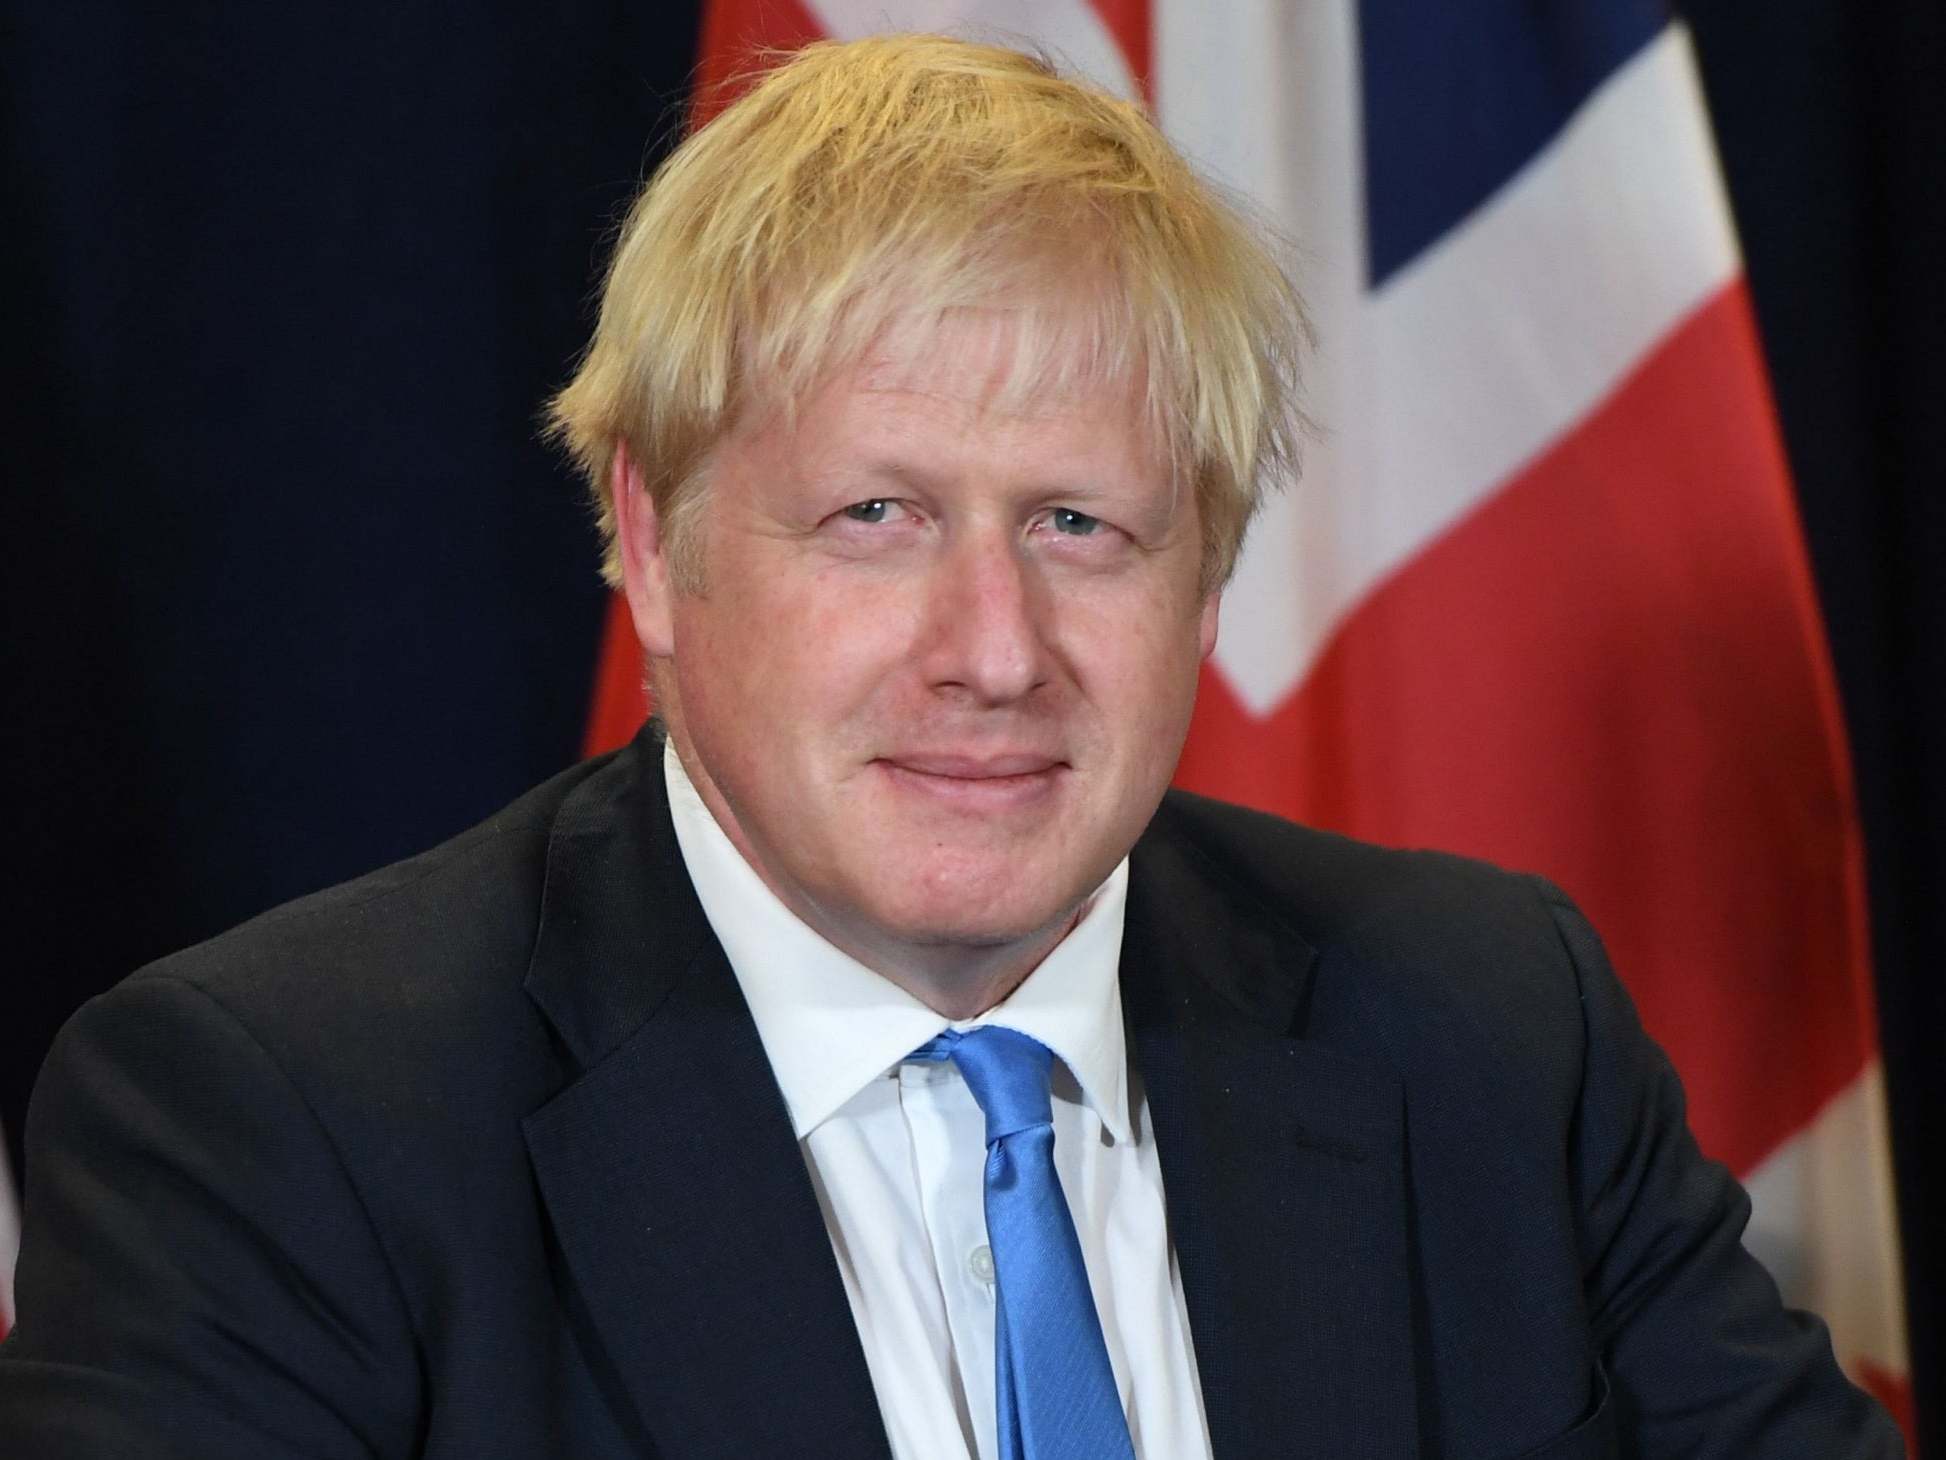 Boris Johnson given two-week deadline to explain relationship with ex-model awarded public money